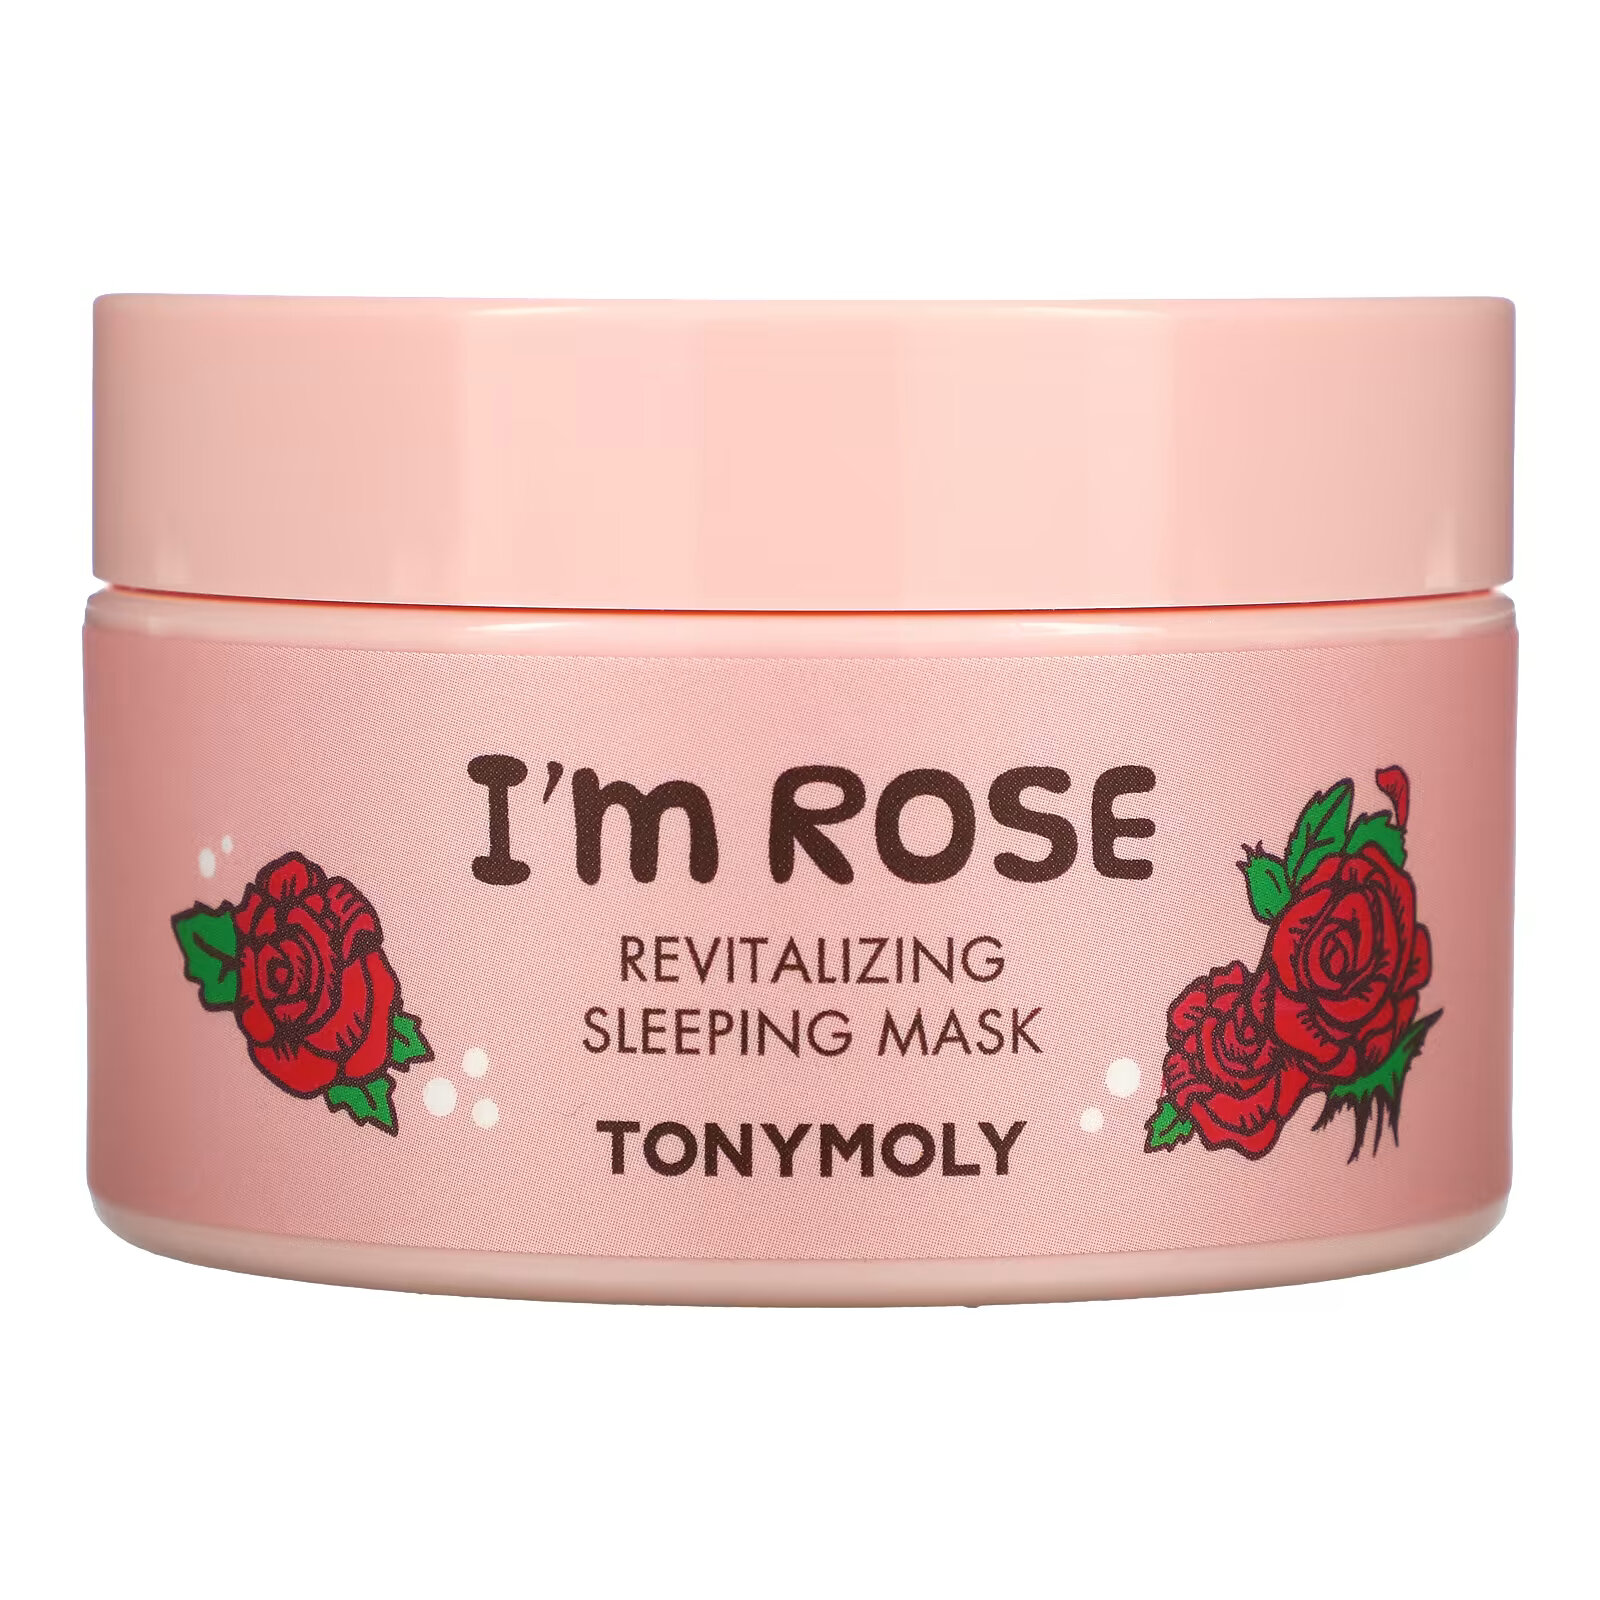 Tony Moly, I'm Rose, Восстанавливающая маска для сна, 3,52 унции (100 г) tony moly i m honey восстанавливающая маска для глубокого увлажнения 100 г 3 52 унции